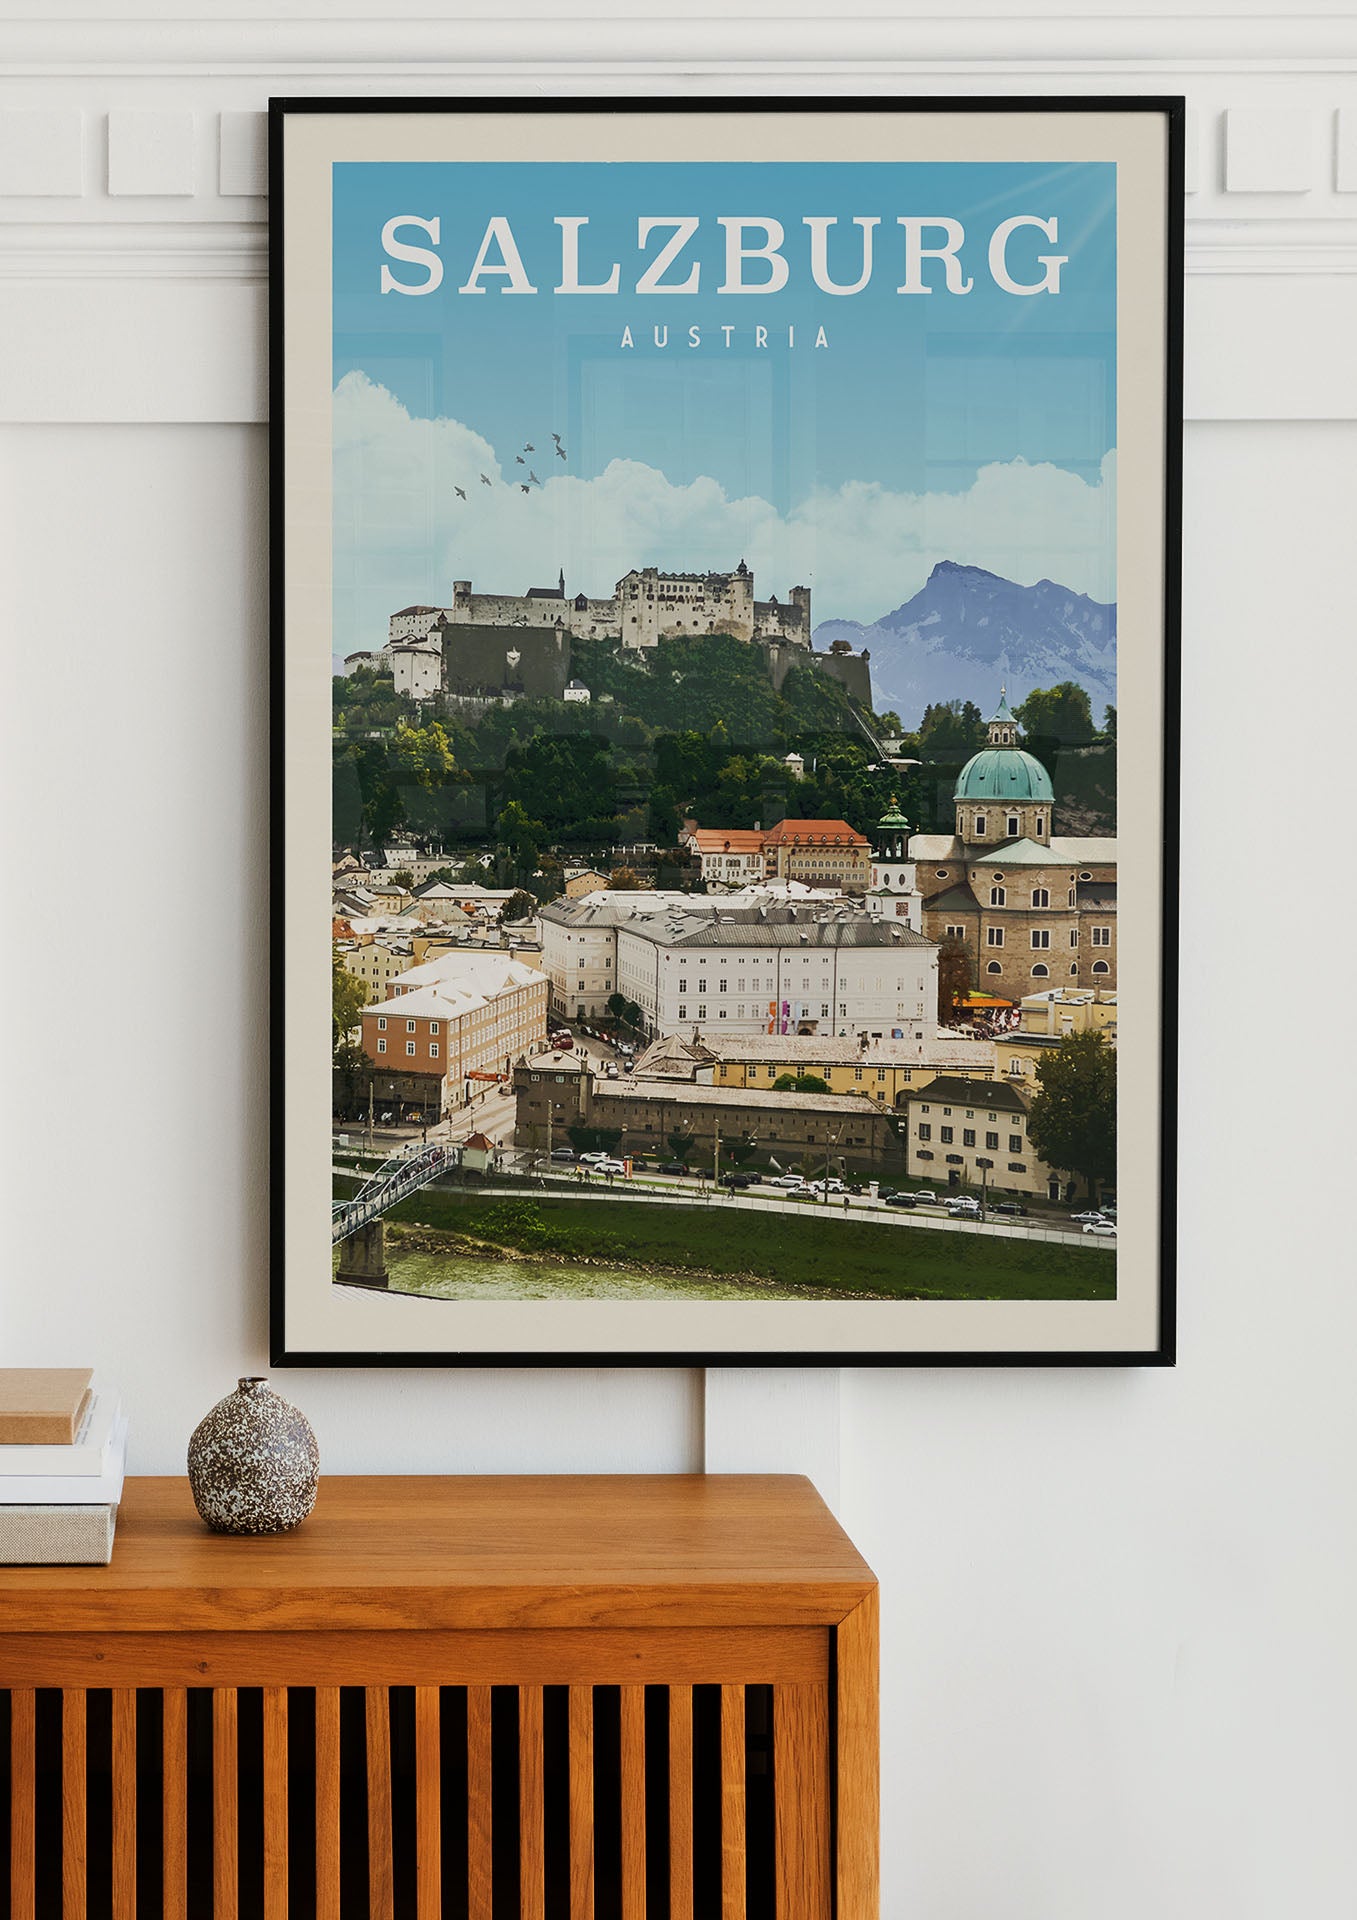 Salzburg, Austria - Vintage Travel Poster